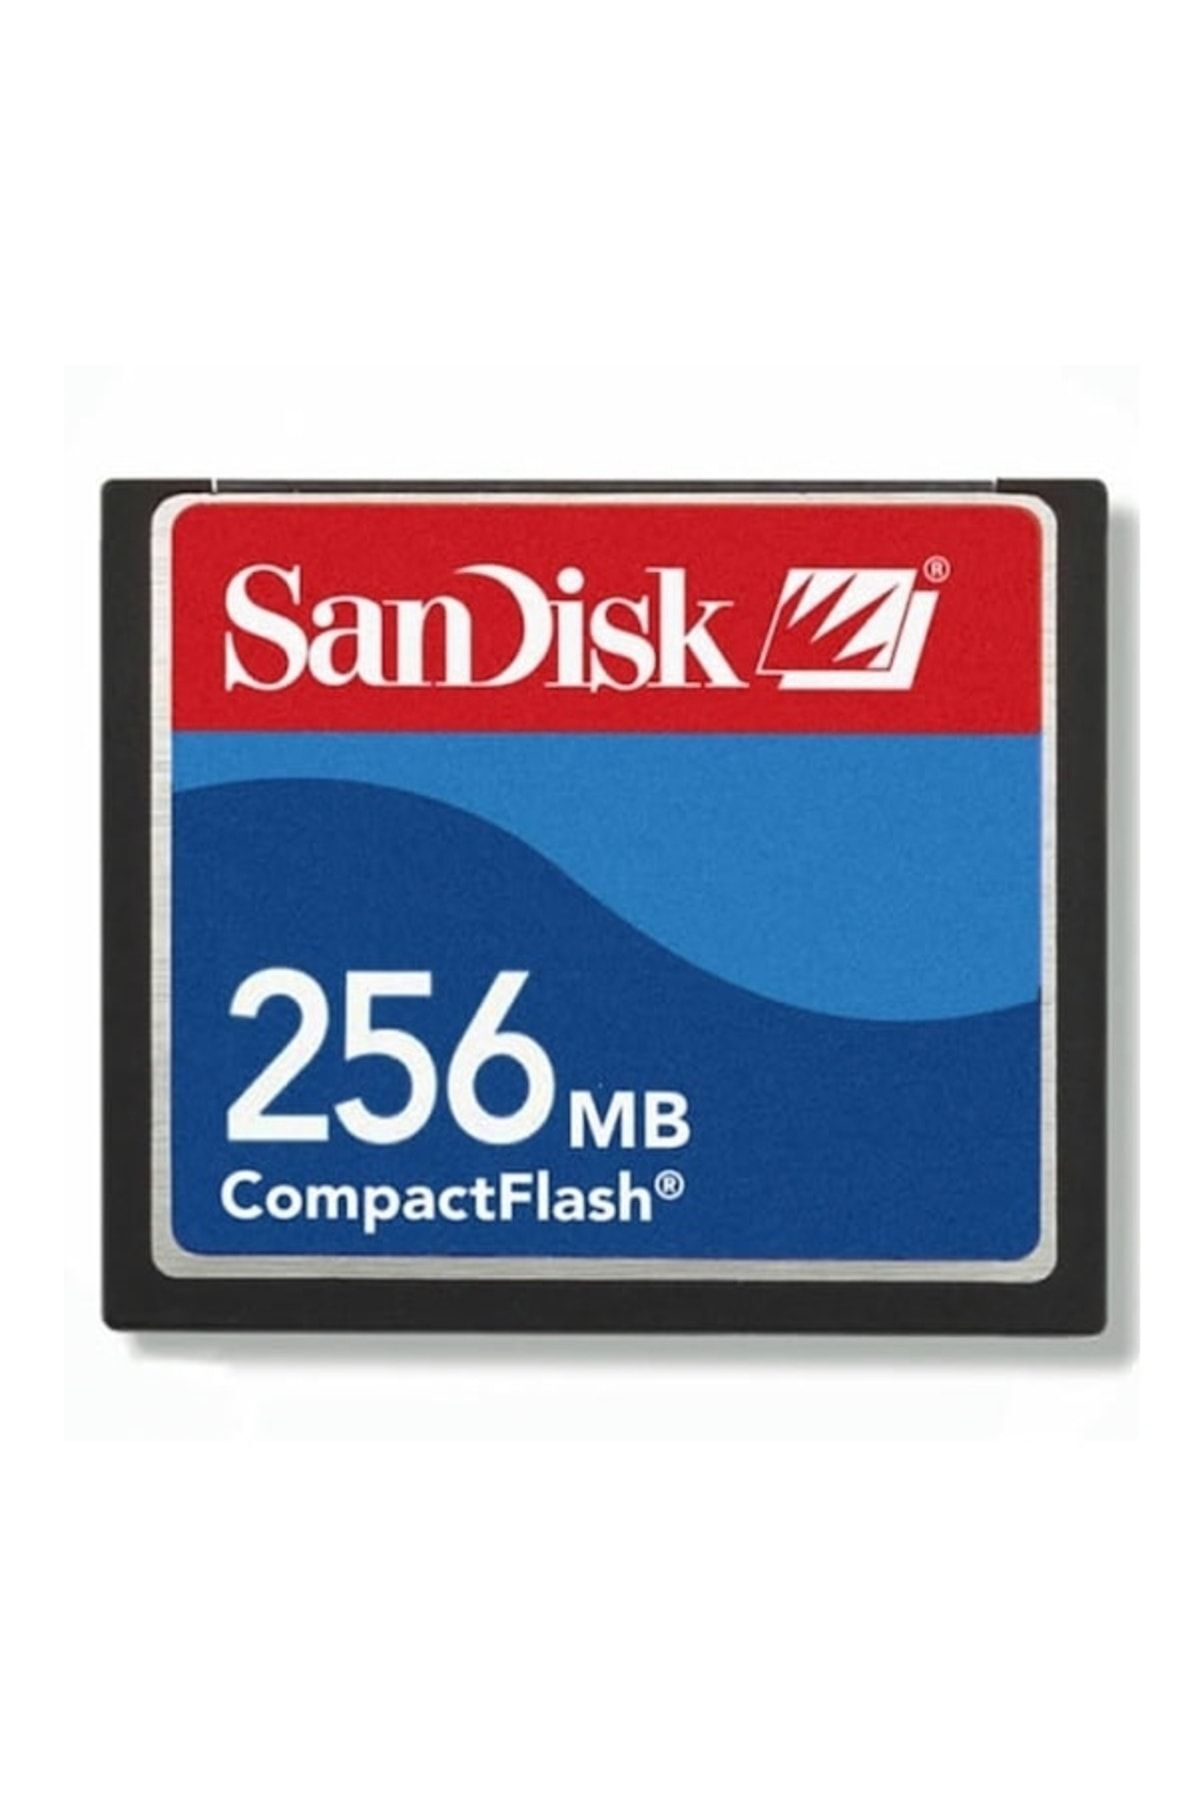 BASTORE Sandiskb 256 Mb Compact Flash Hafıza Kartı Cf Kart